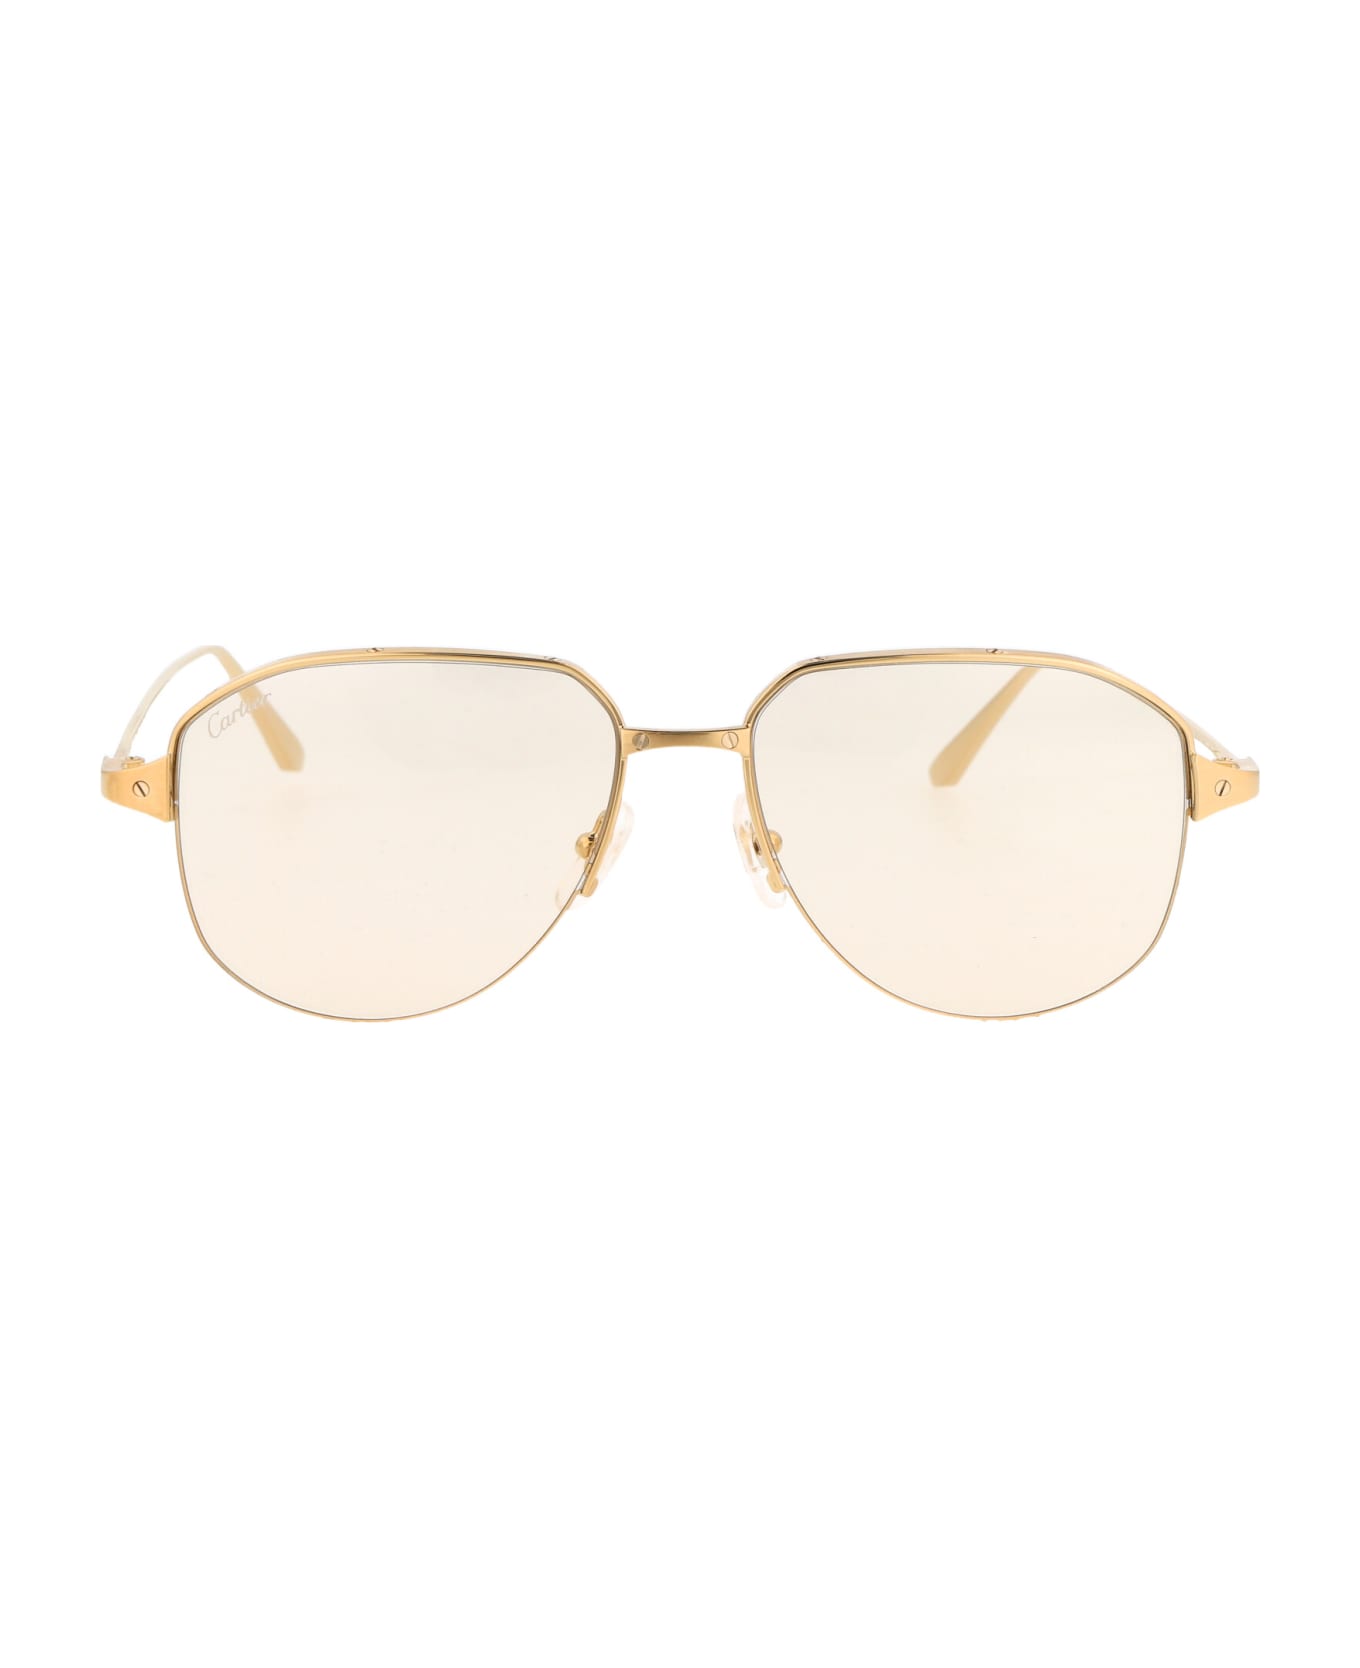 Cartier Eyewear Ct0352s Sunglasses - 002 GOLD GOLD TRANSPARENT